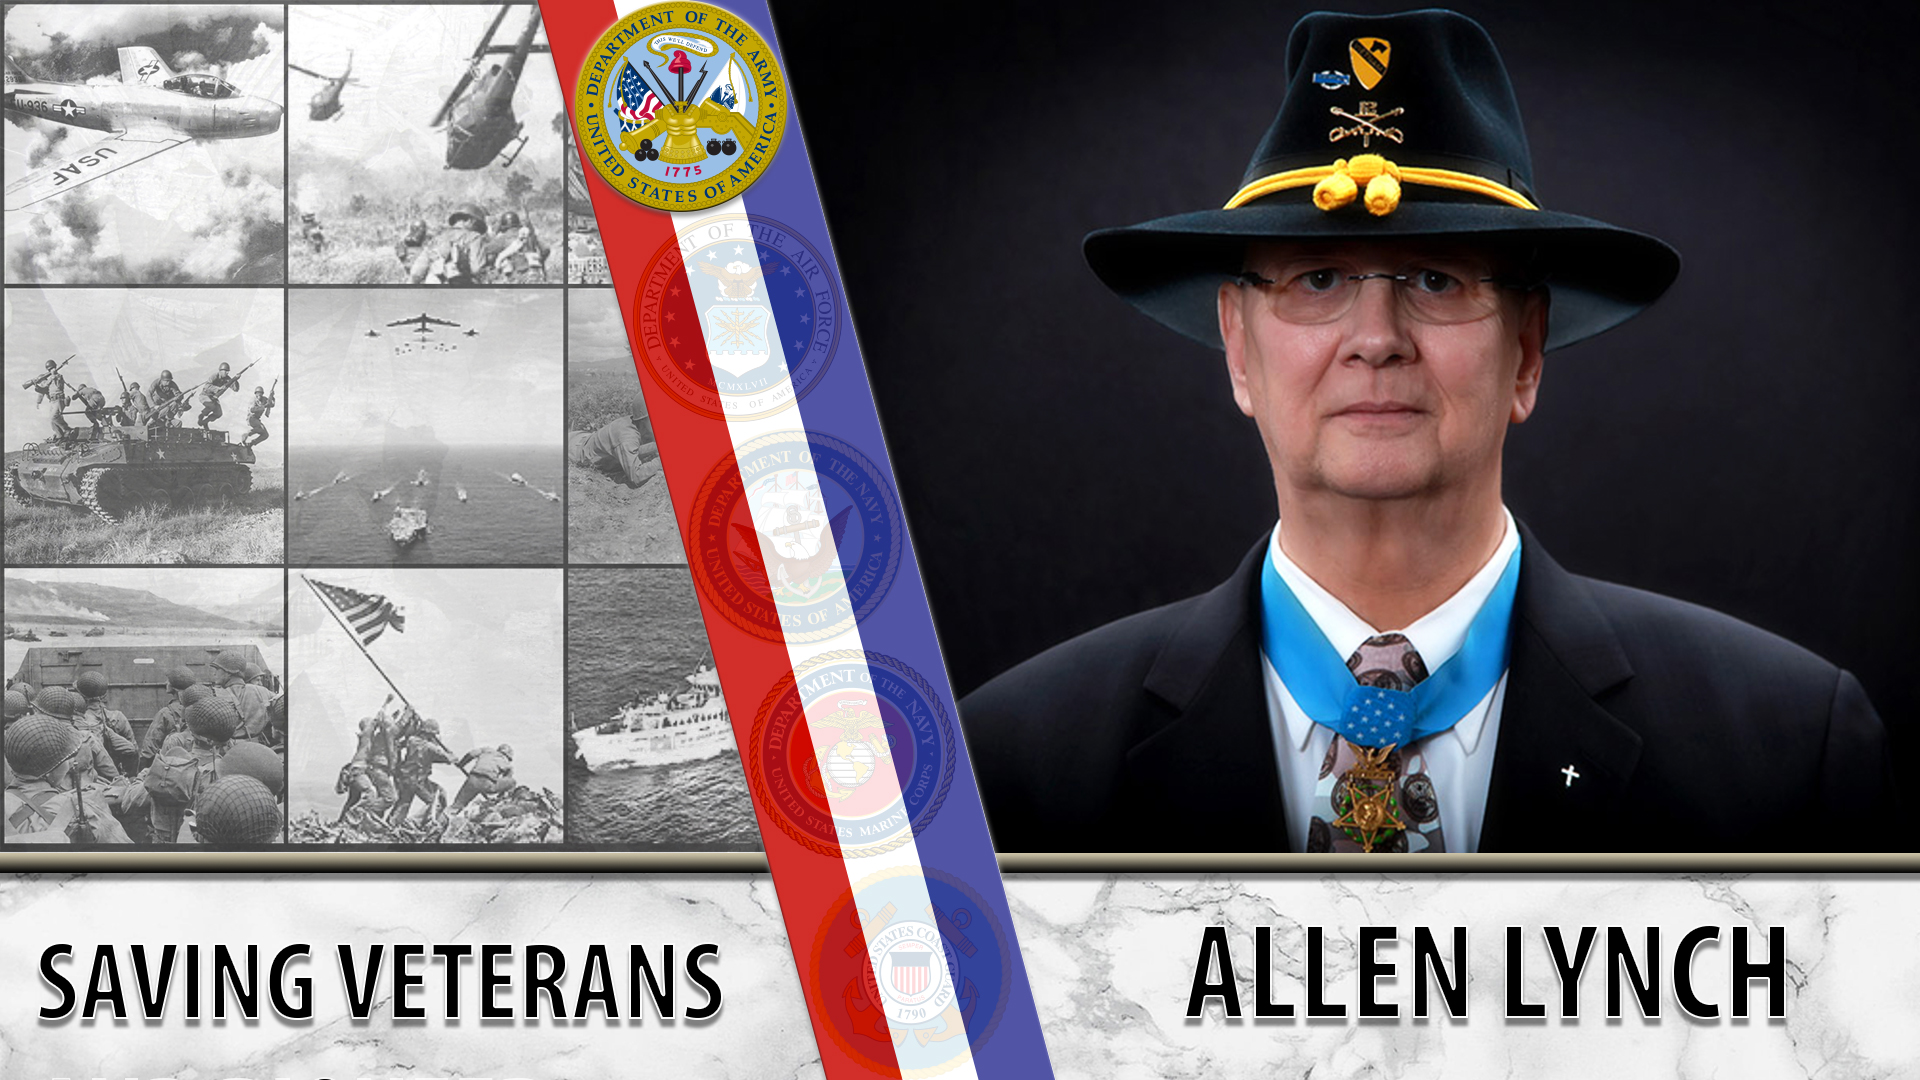 Graphic for Allen Lynch. Text reads: Saving Veterans - Allen Lynch